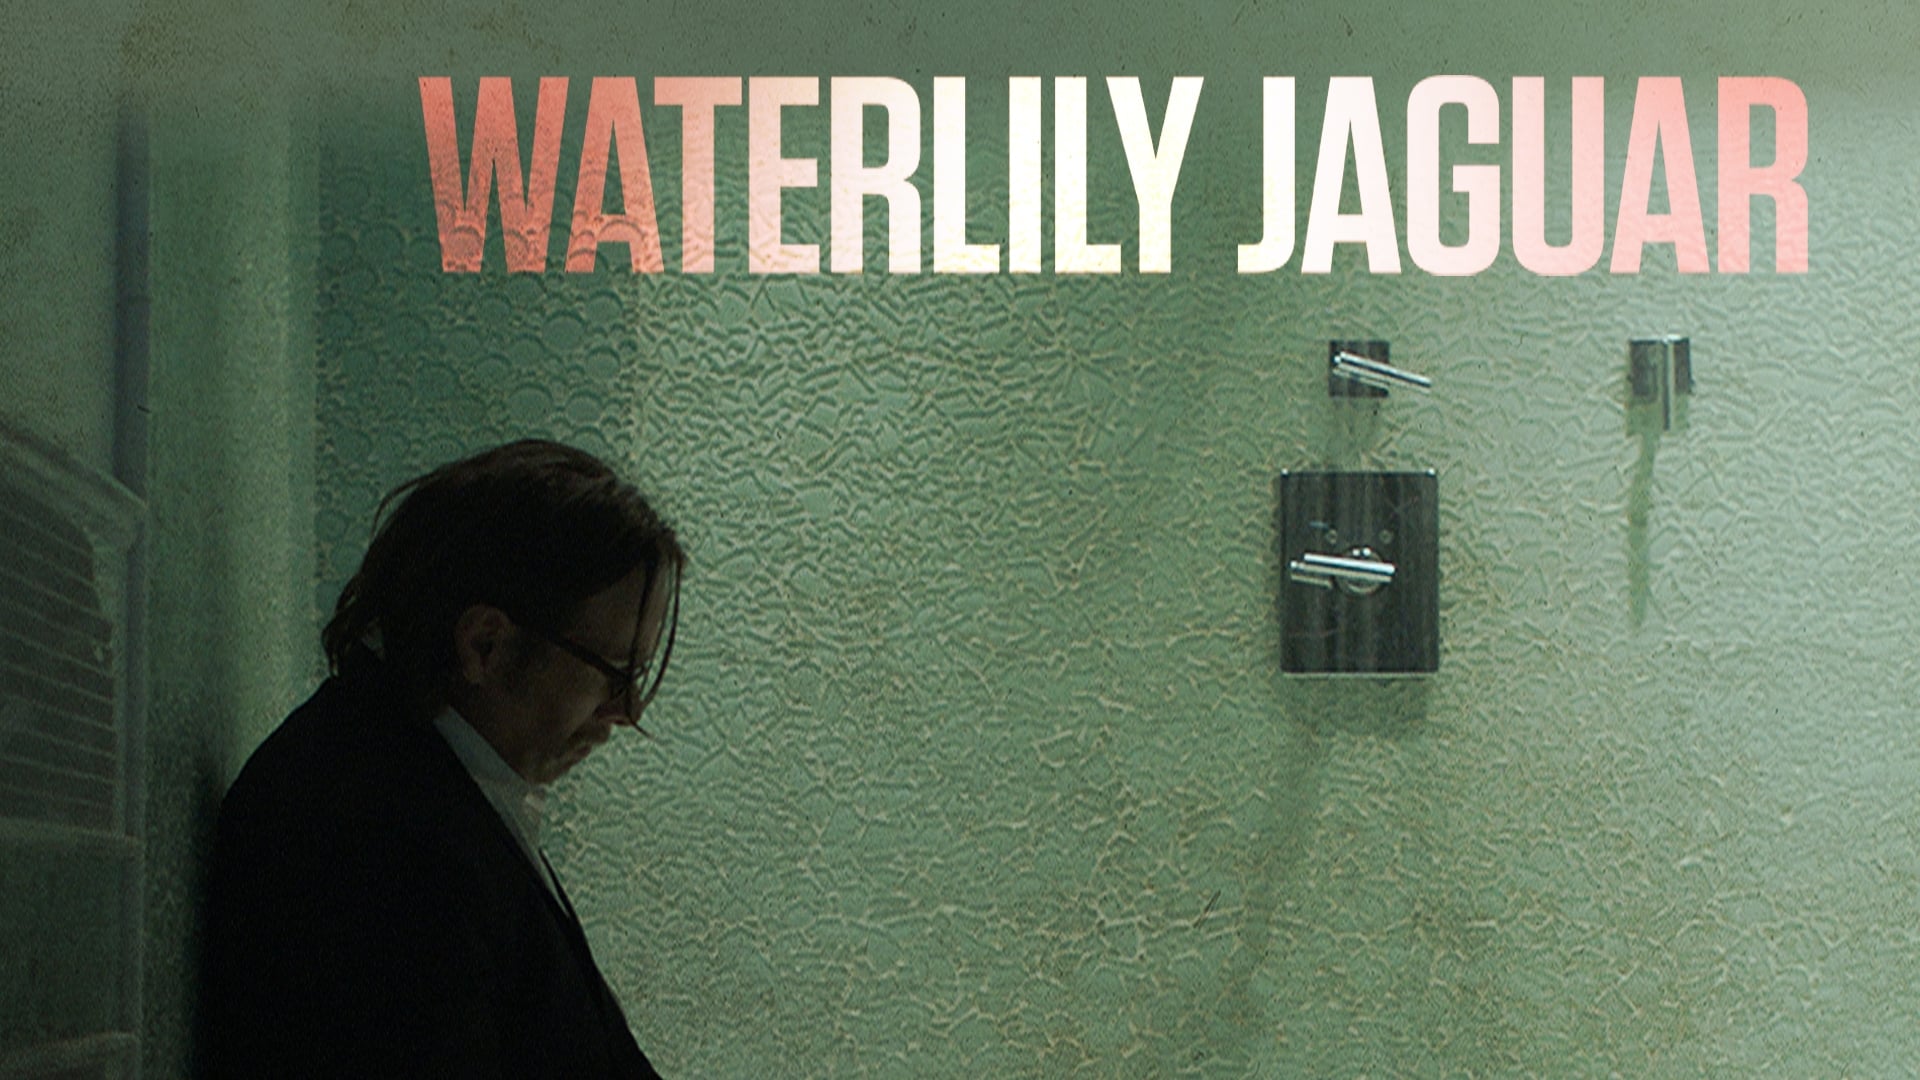 Waterlily Jaguar (2018)